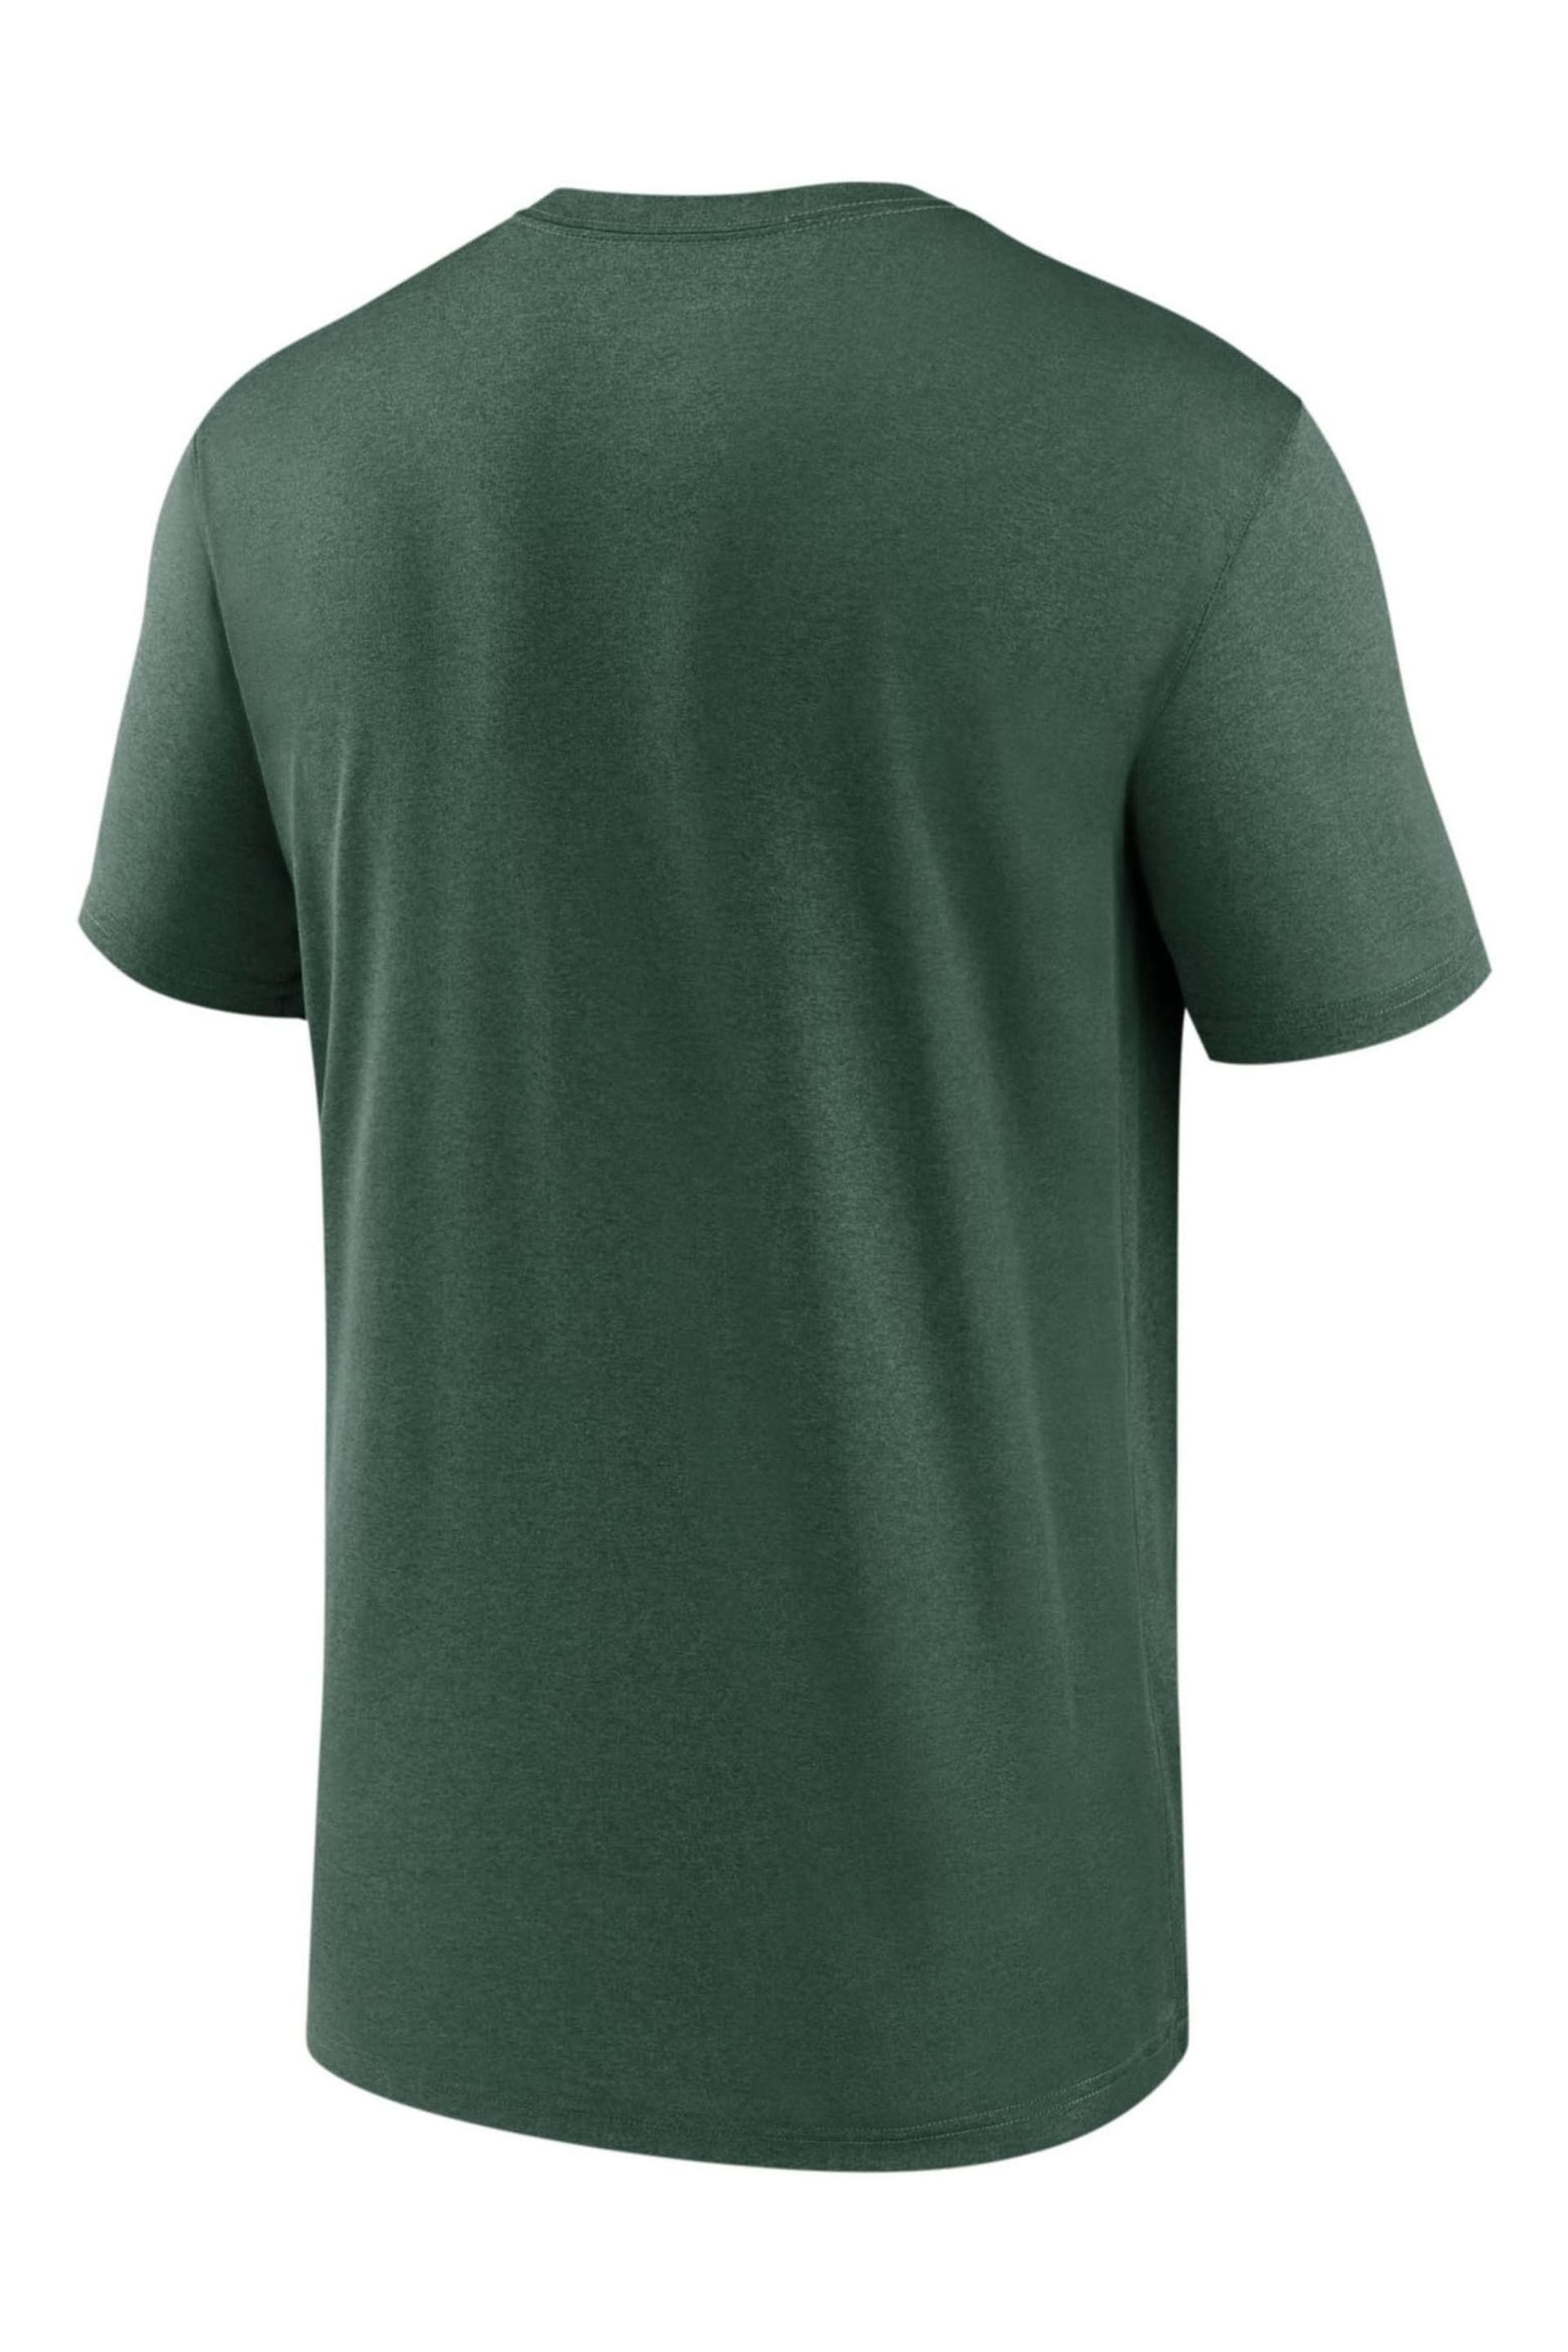 Nike Green NFL Fanatics Green Bay Packers Property of T-Shirt - Image 3 of 3